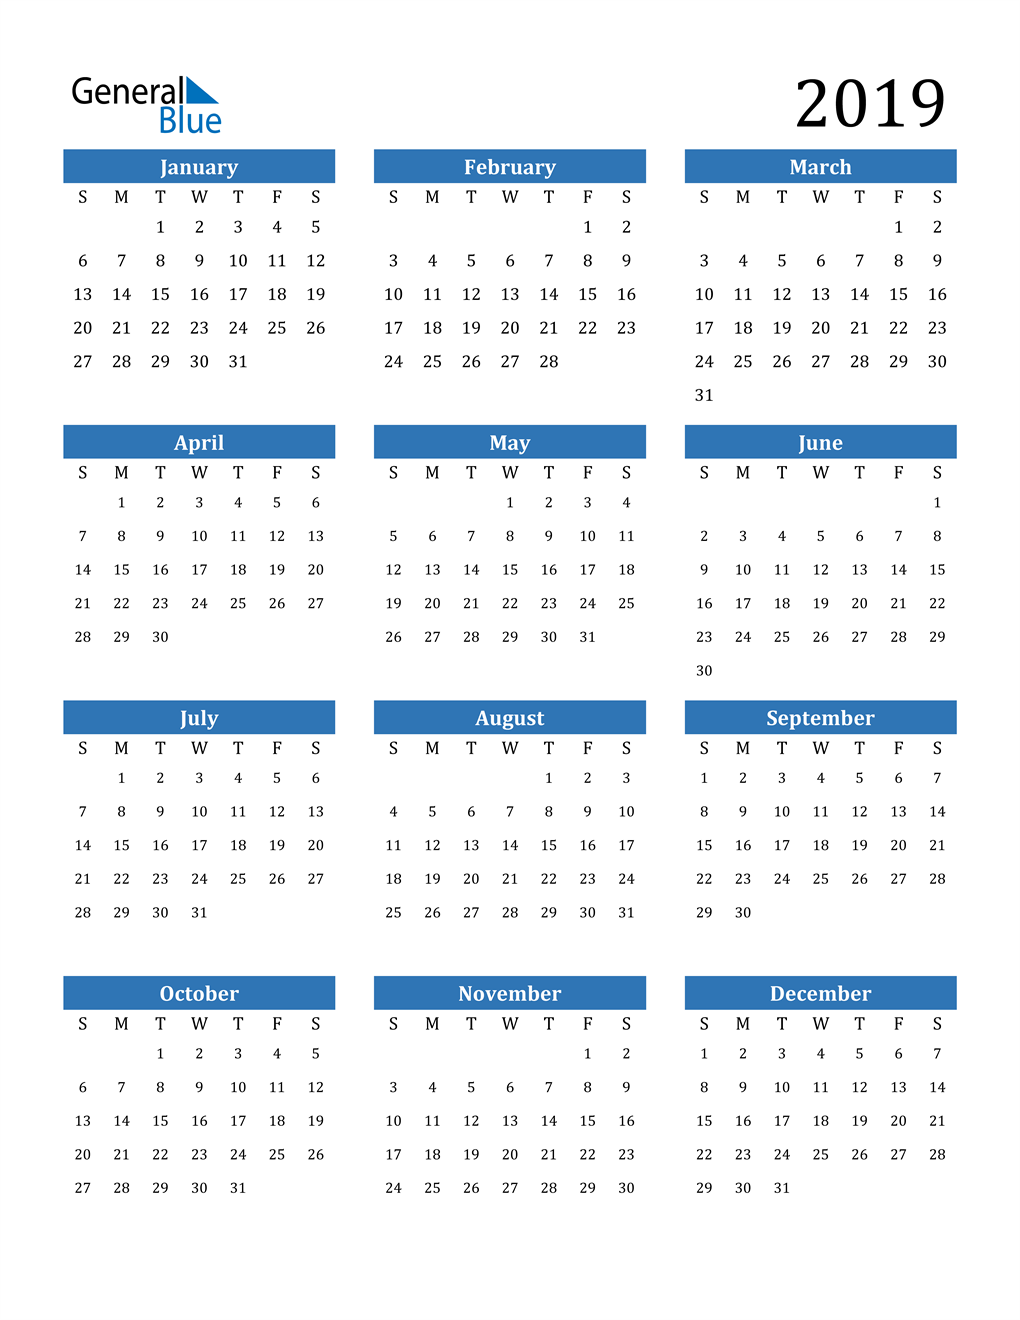 2014-calendar-row-su-lndscp-mmk-prodzero-flickr